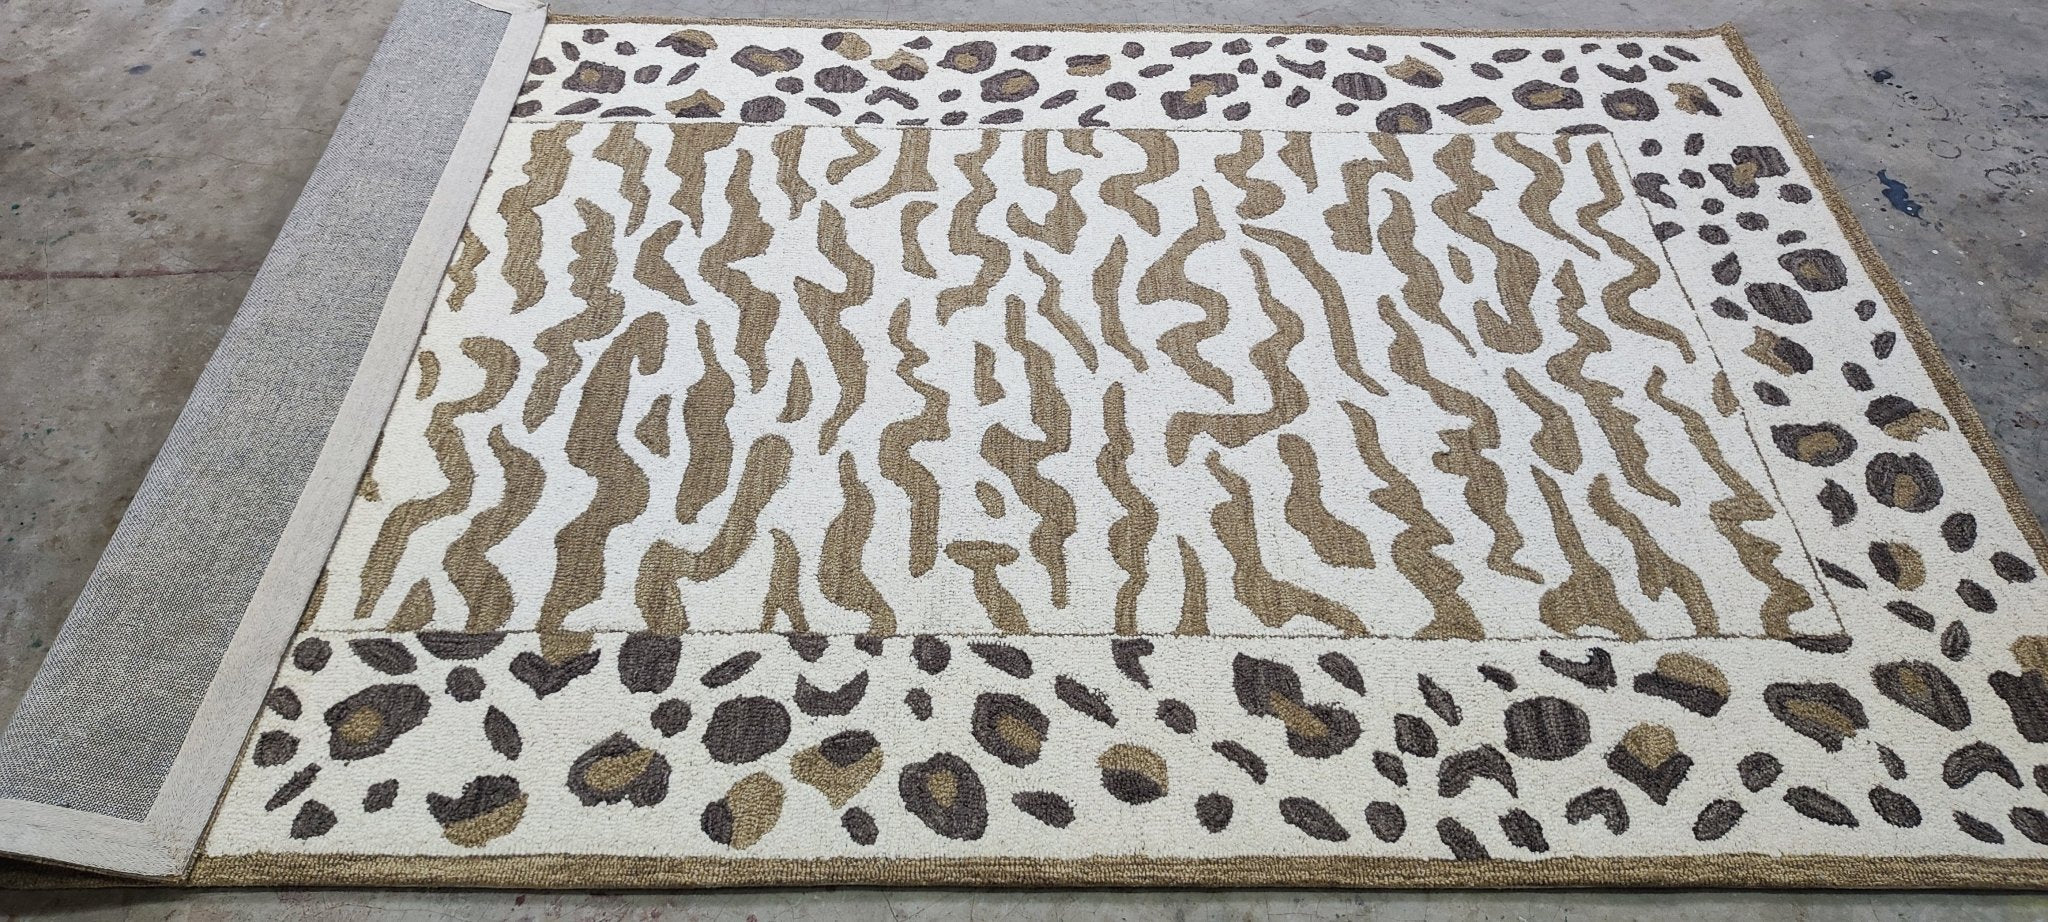 Leopard Skin Design Tufted 5x8 Wool Area Rug